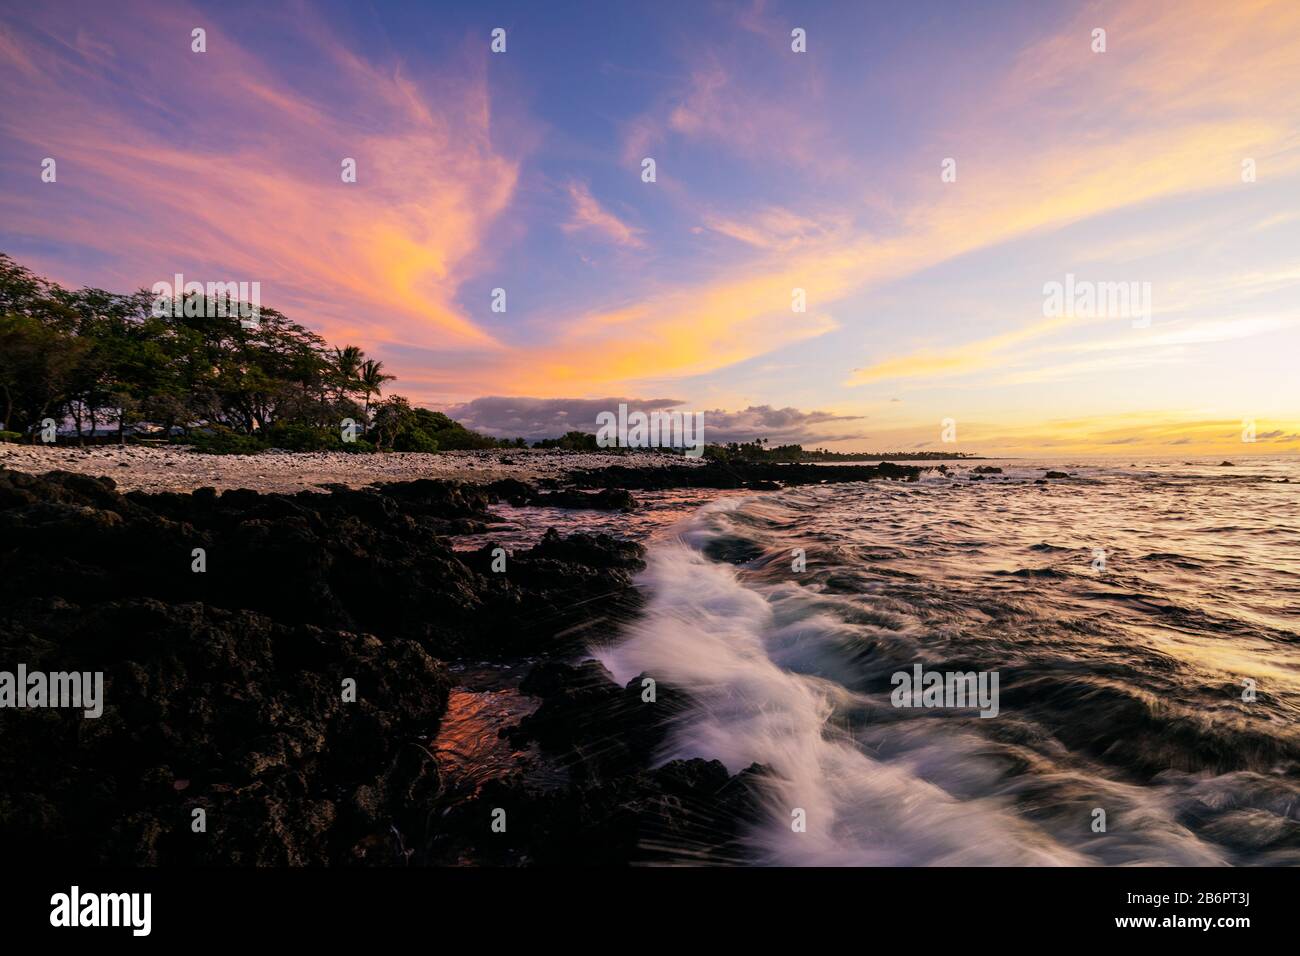 USA, Hawaii, Big Island, west coast resort, Pauoa Bay beach at sunet Stock Photo